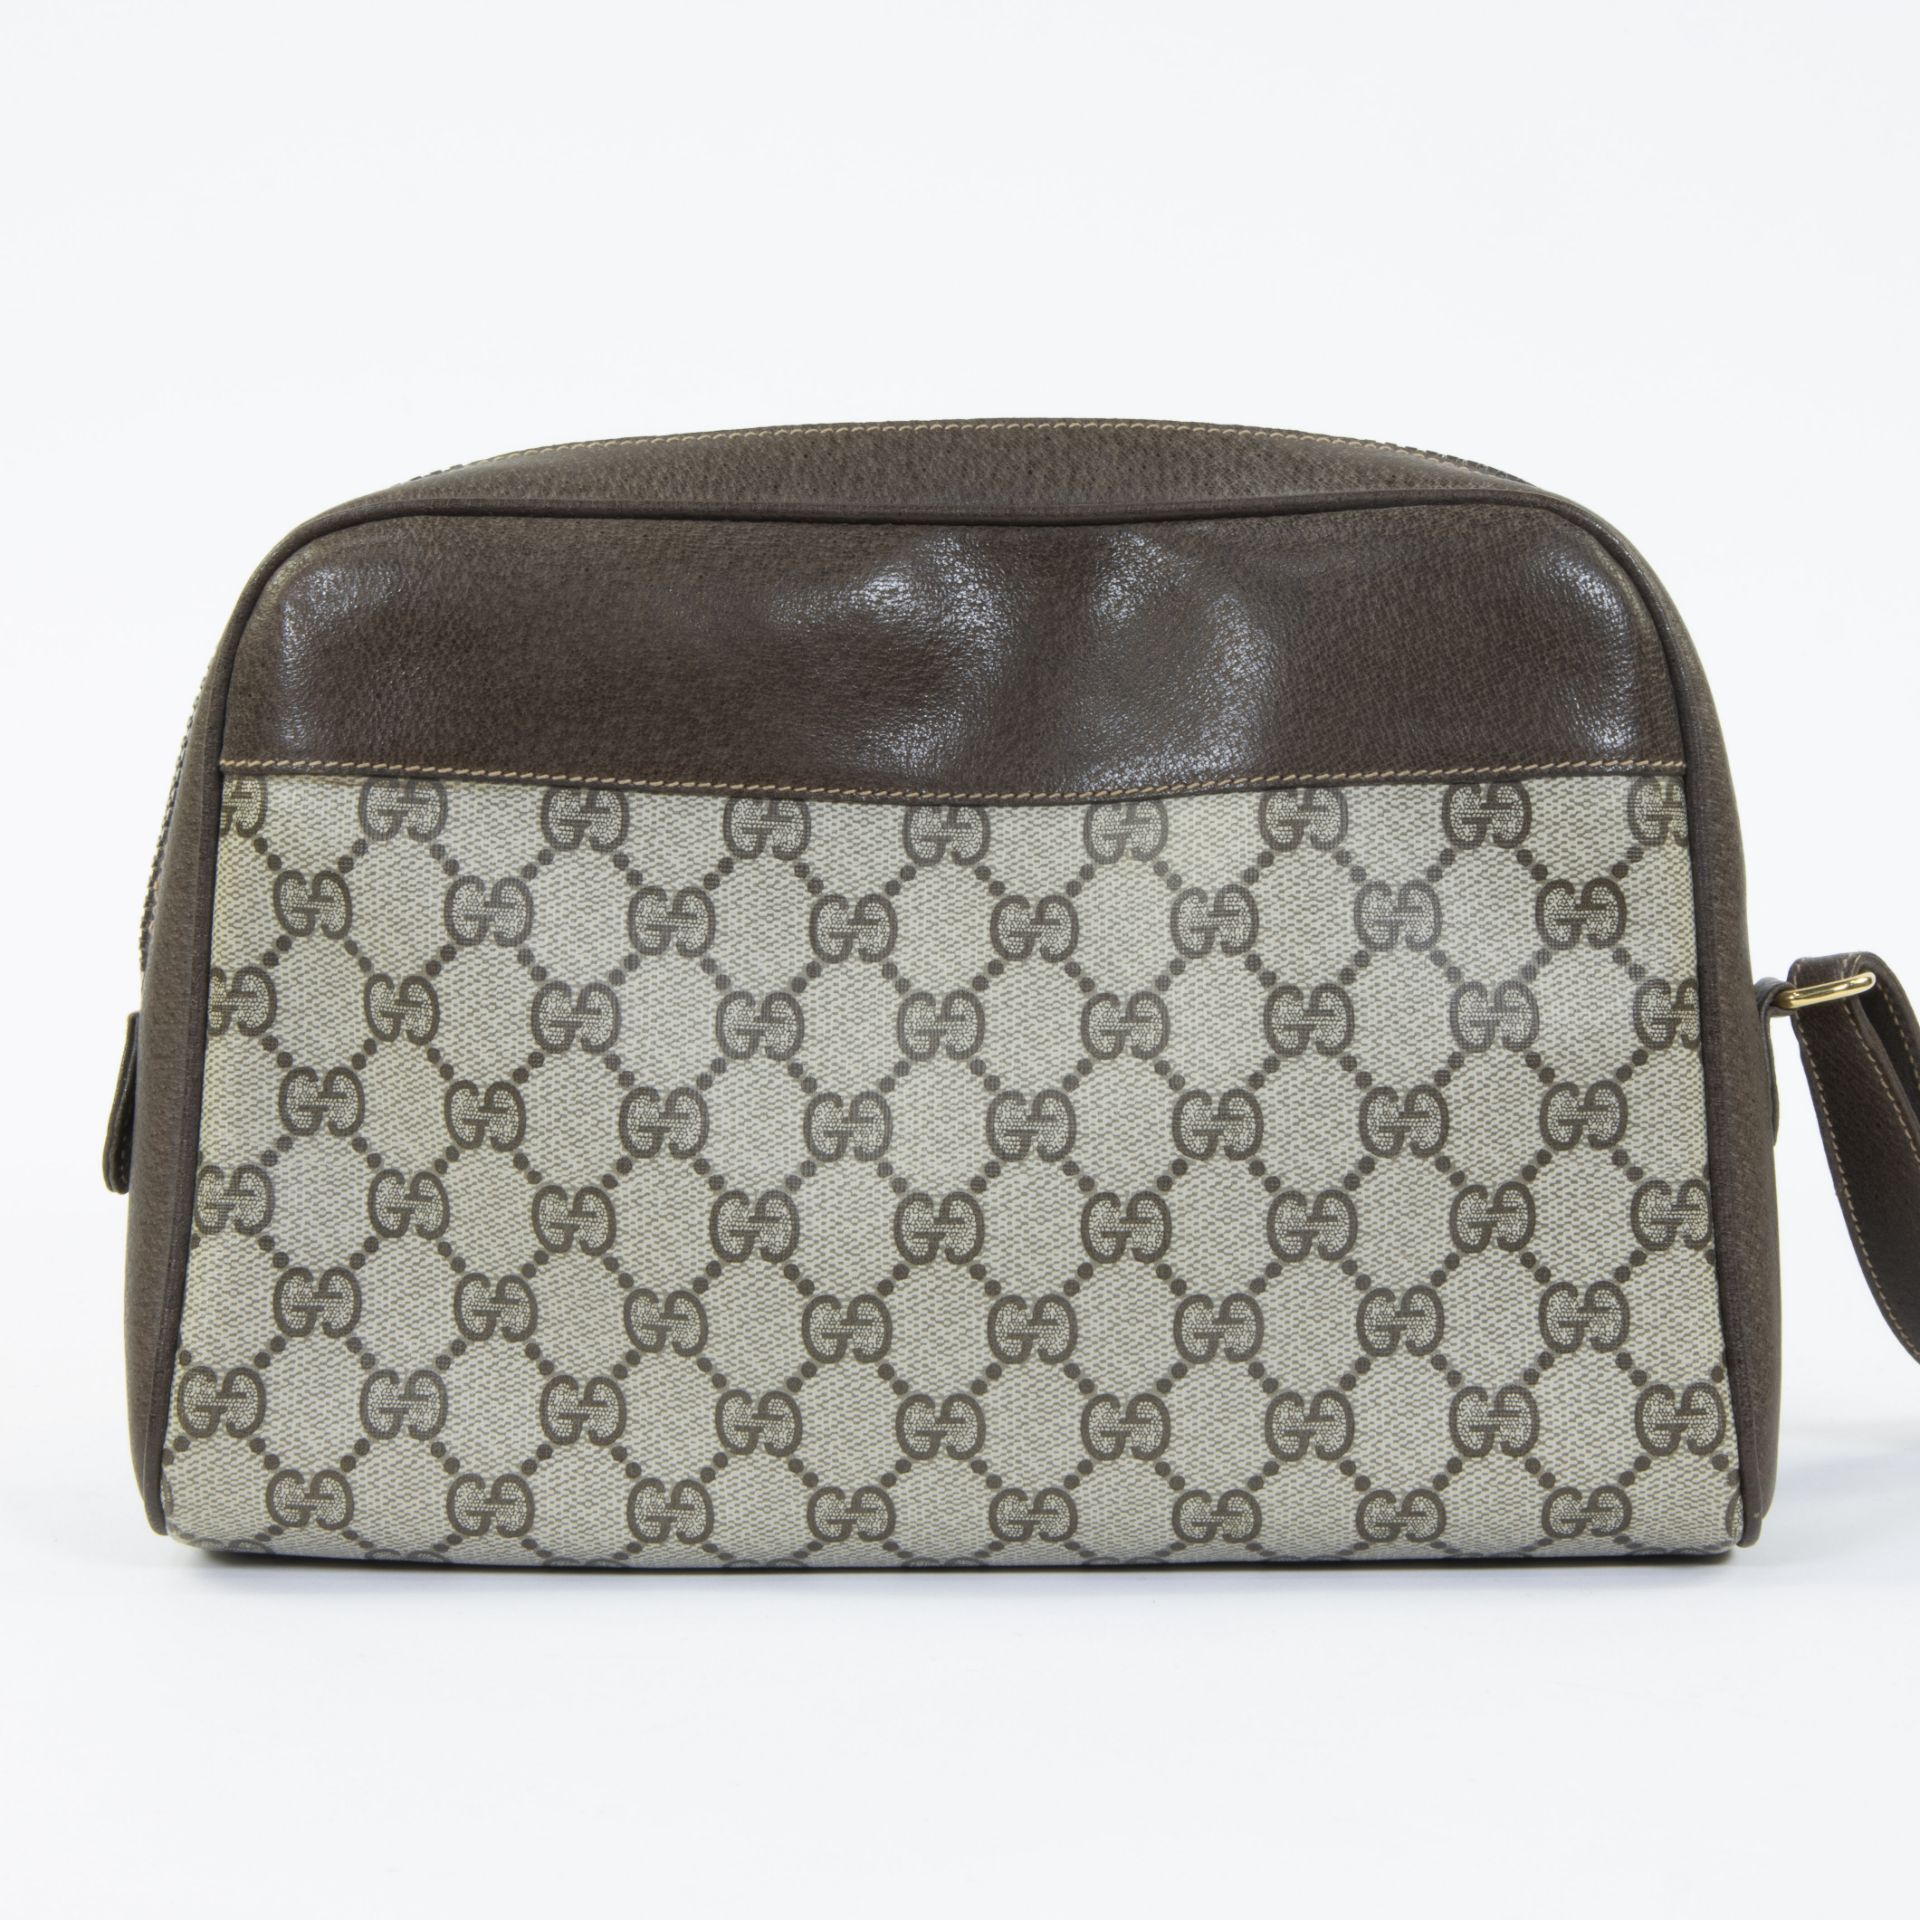 Gucci travel bag and pouch - Bild 5 aus 9